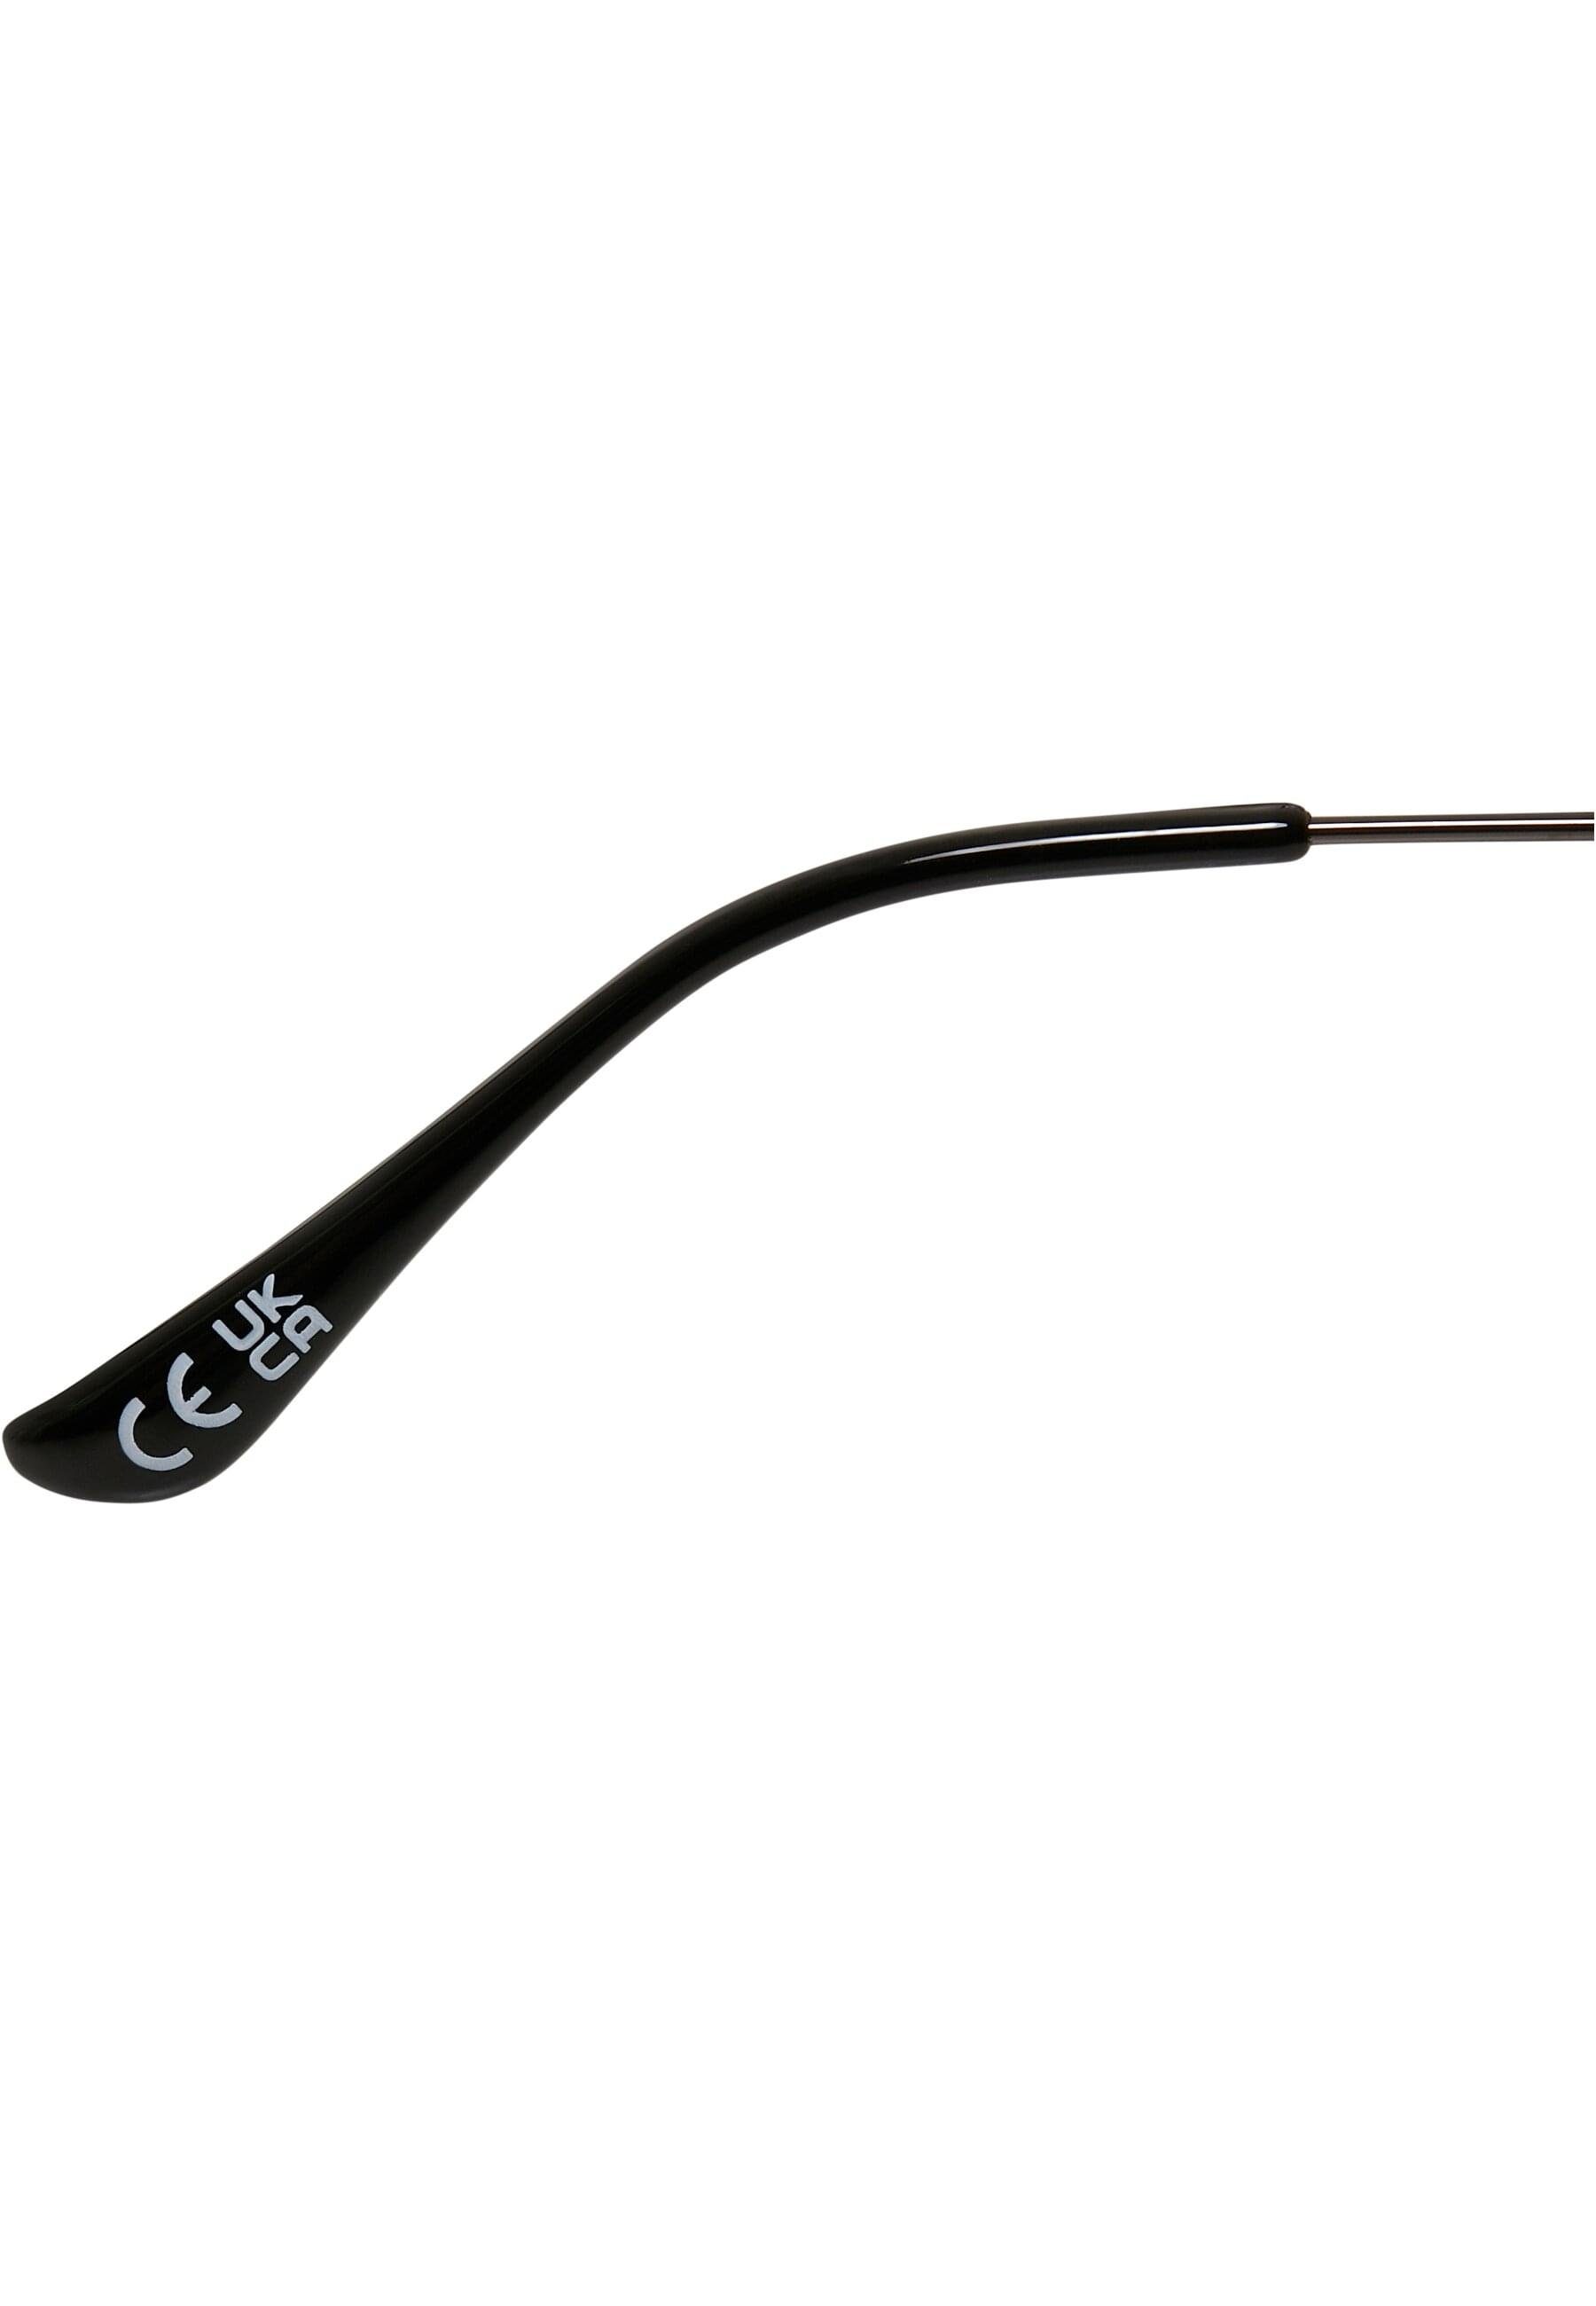 URBAN CLASSICS Sonnenbrille Unisex Sunglasses Heart Chain black/black With